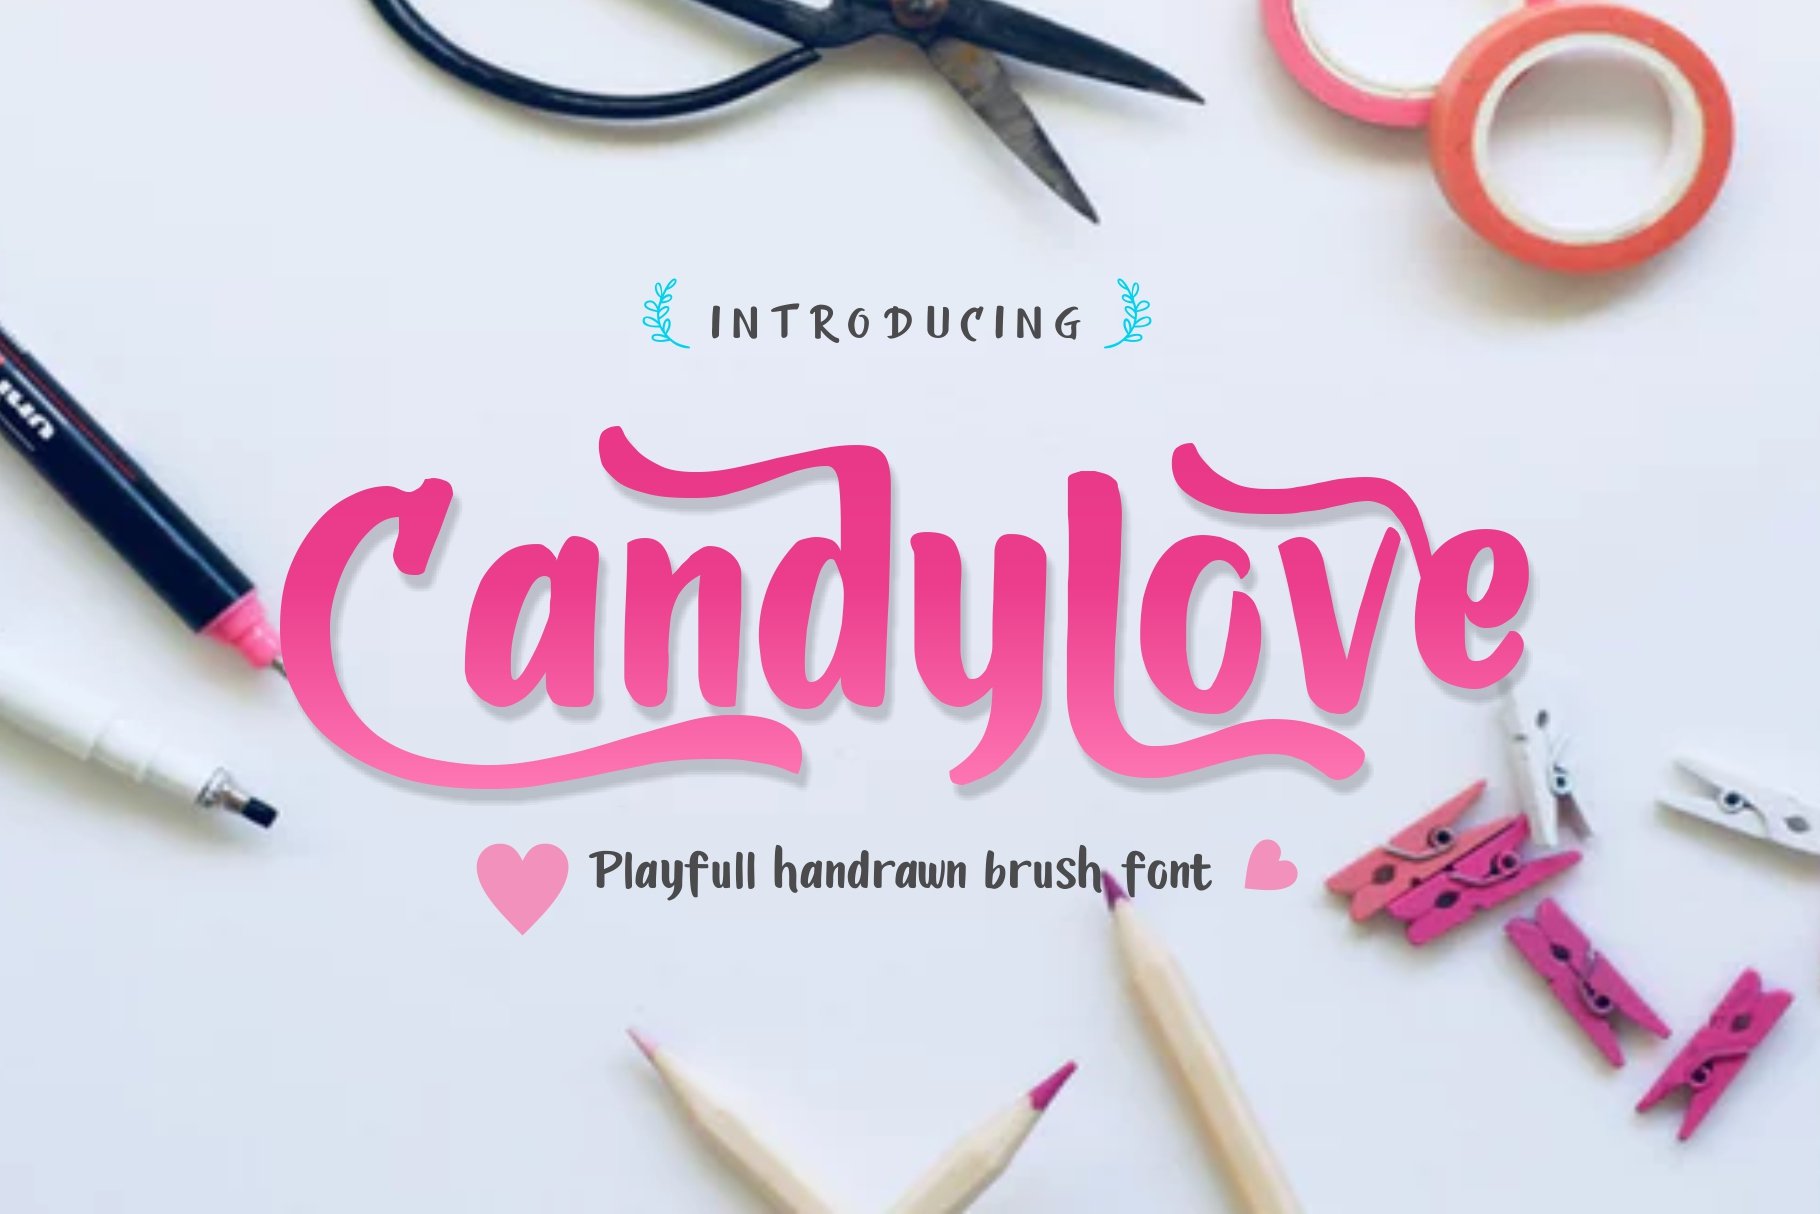 Candylove Playfull brushwritten font cover image.